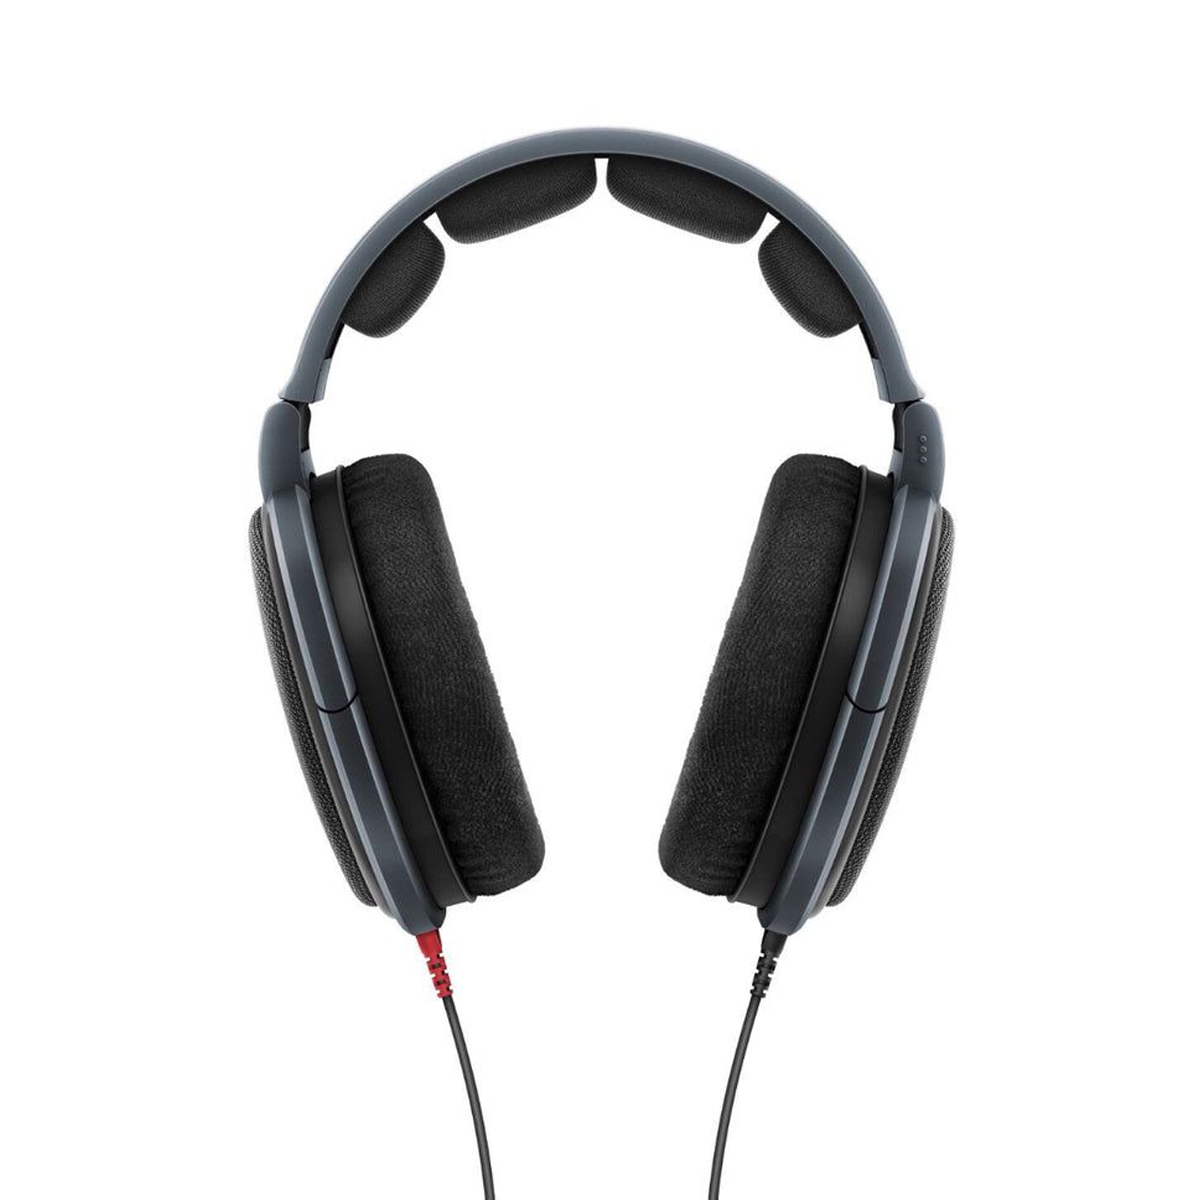 Sennheiser HD 600 Audiophile Open Back Headphone